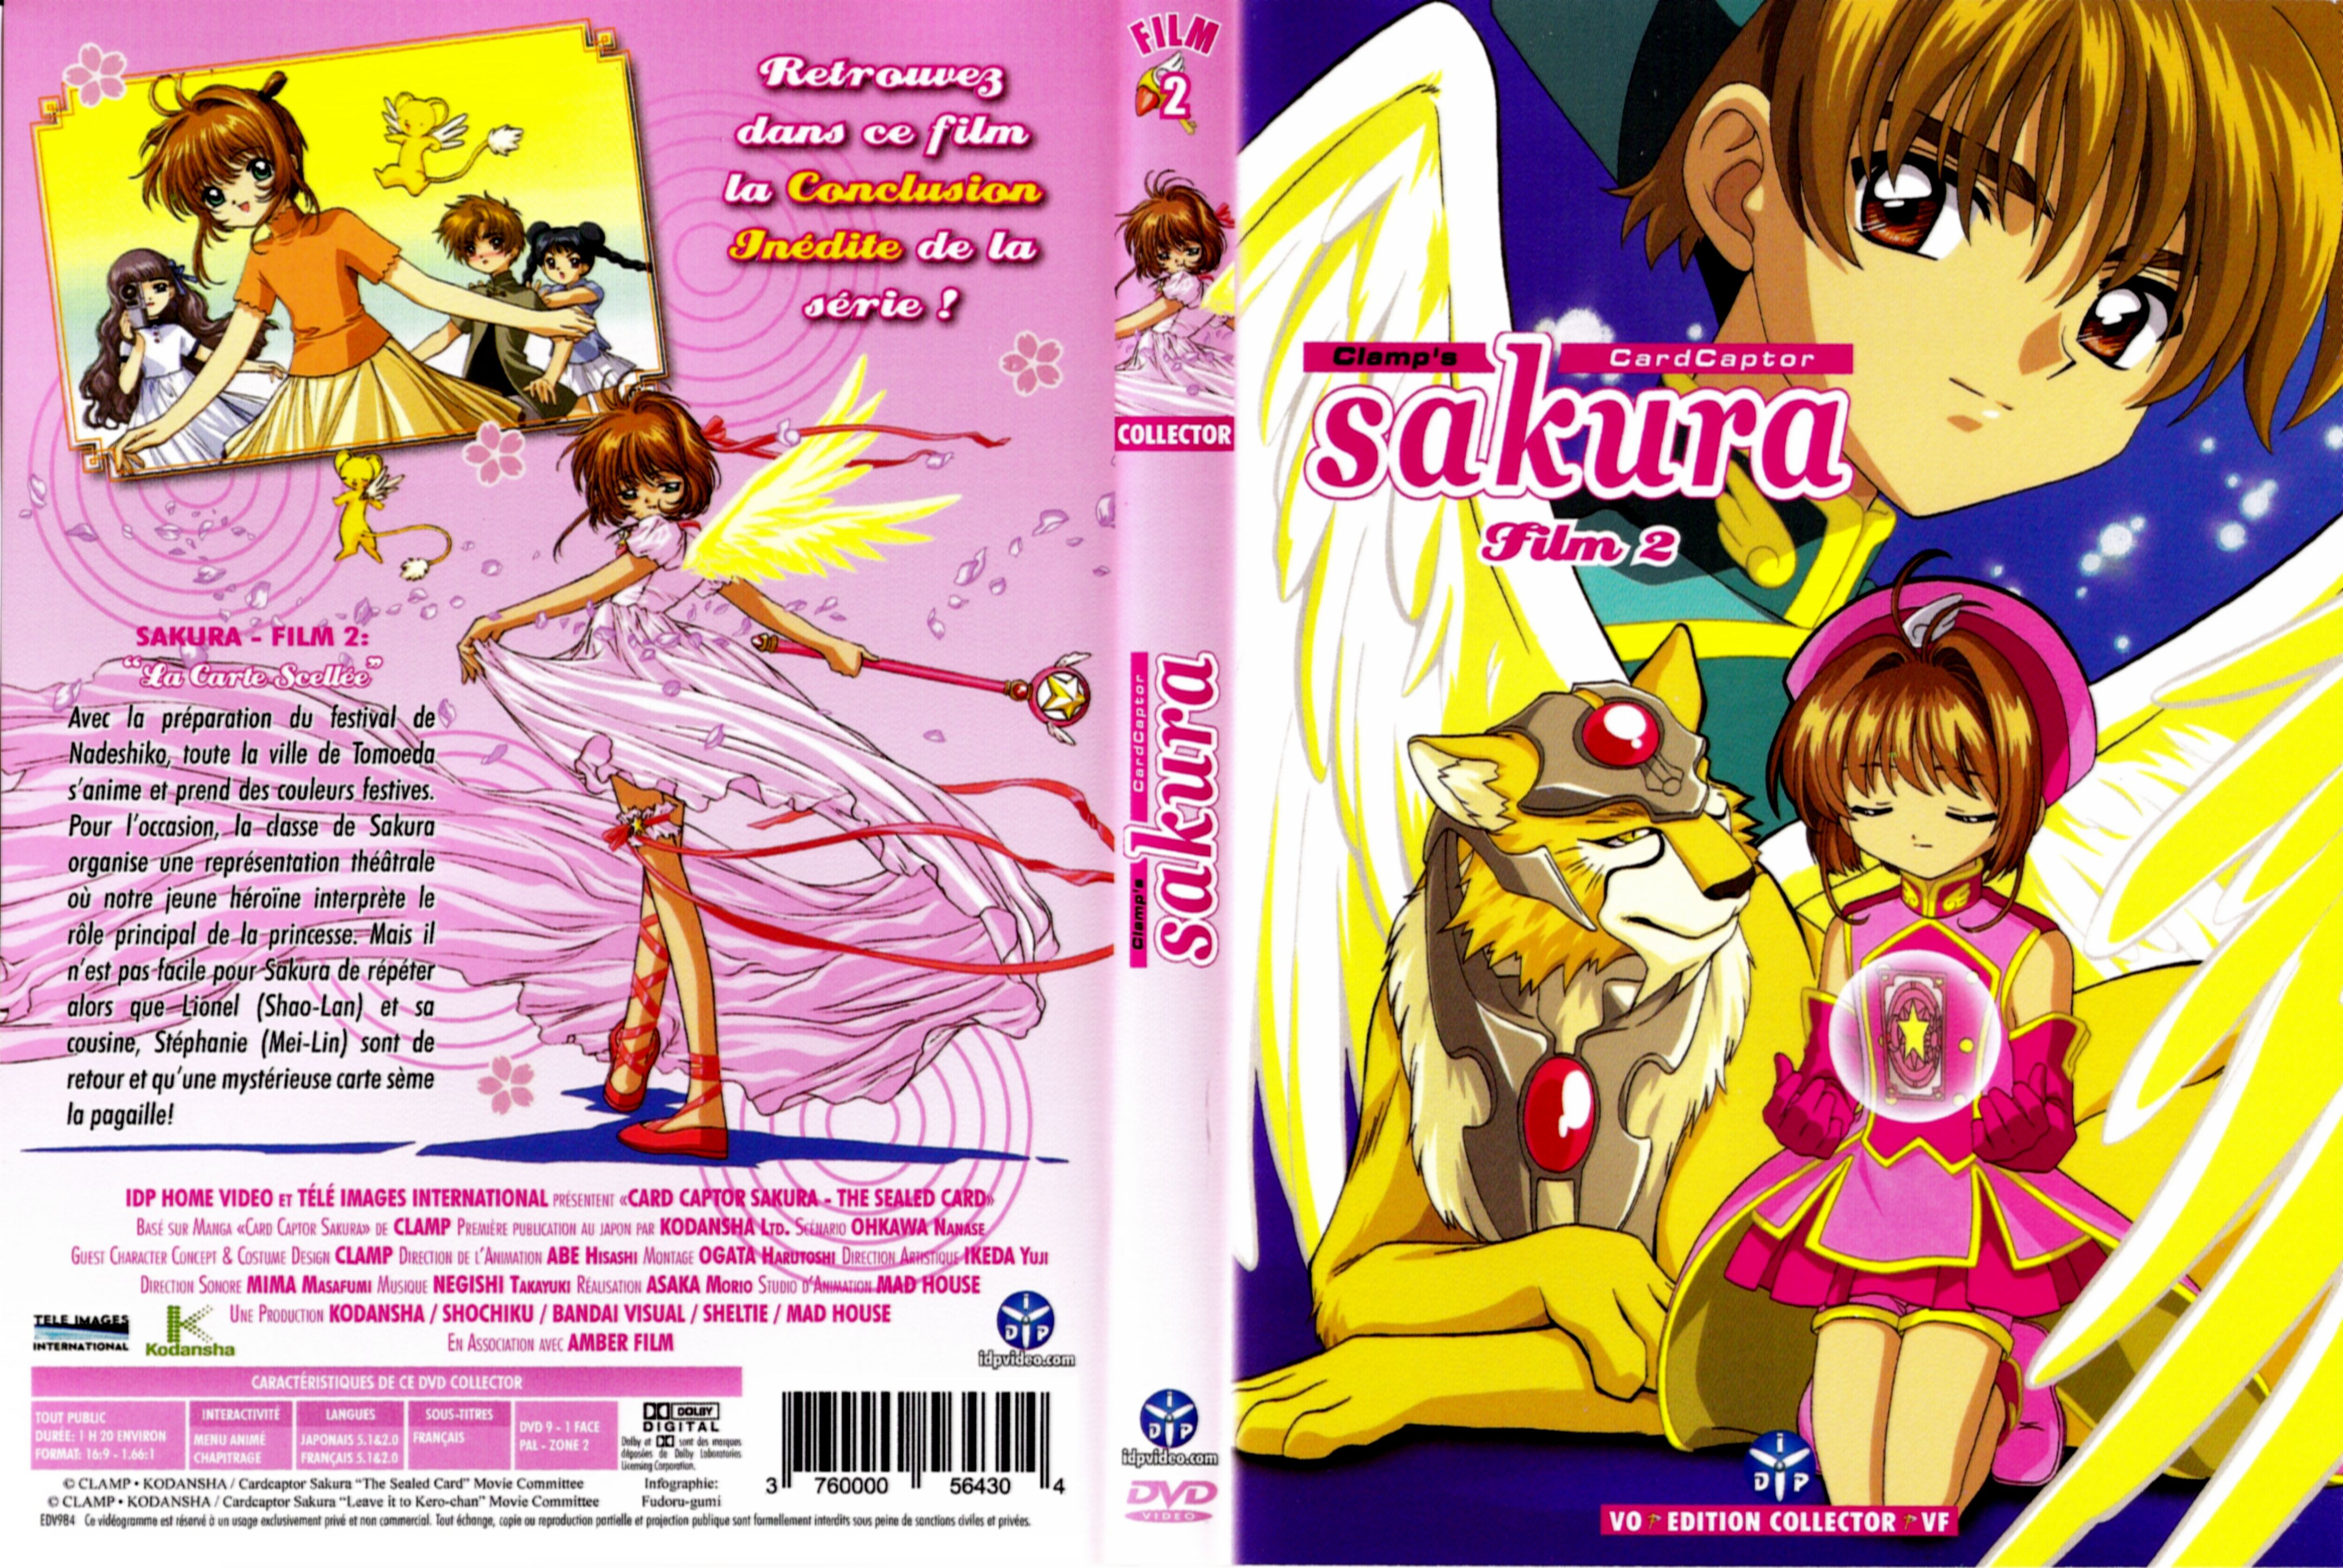 Jaquette DVD Card Captor Sakura le film 2